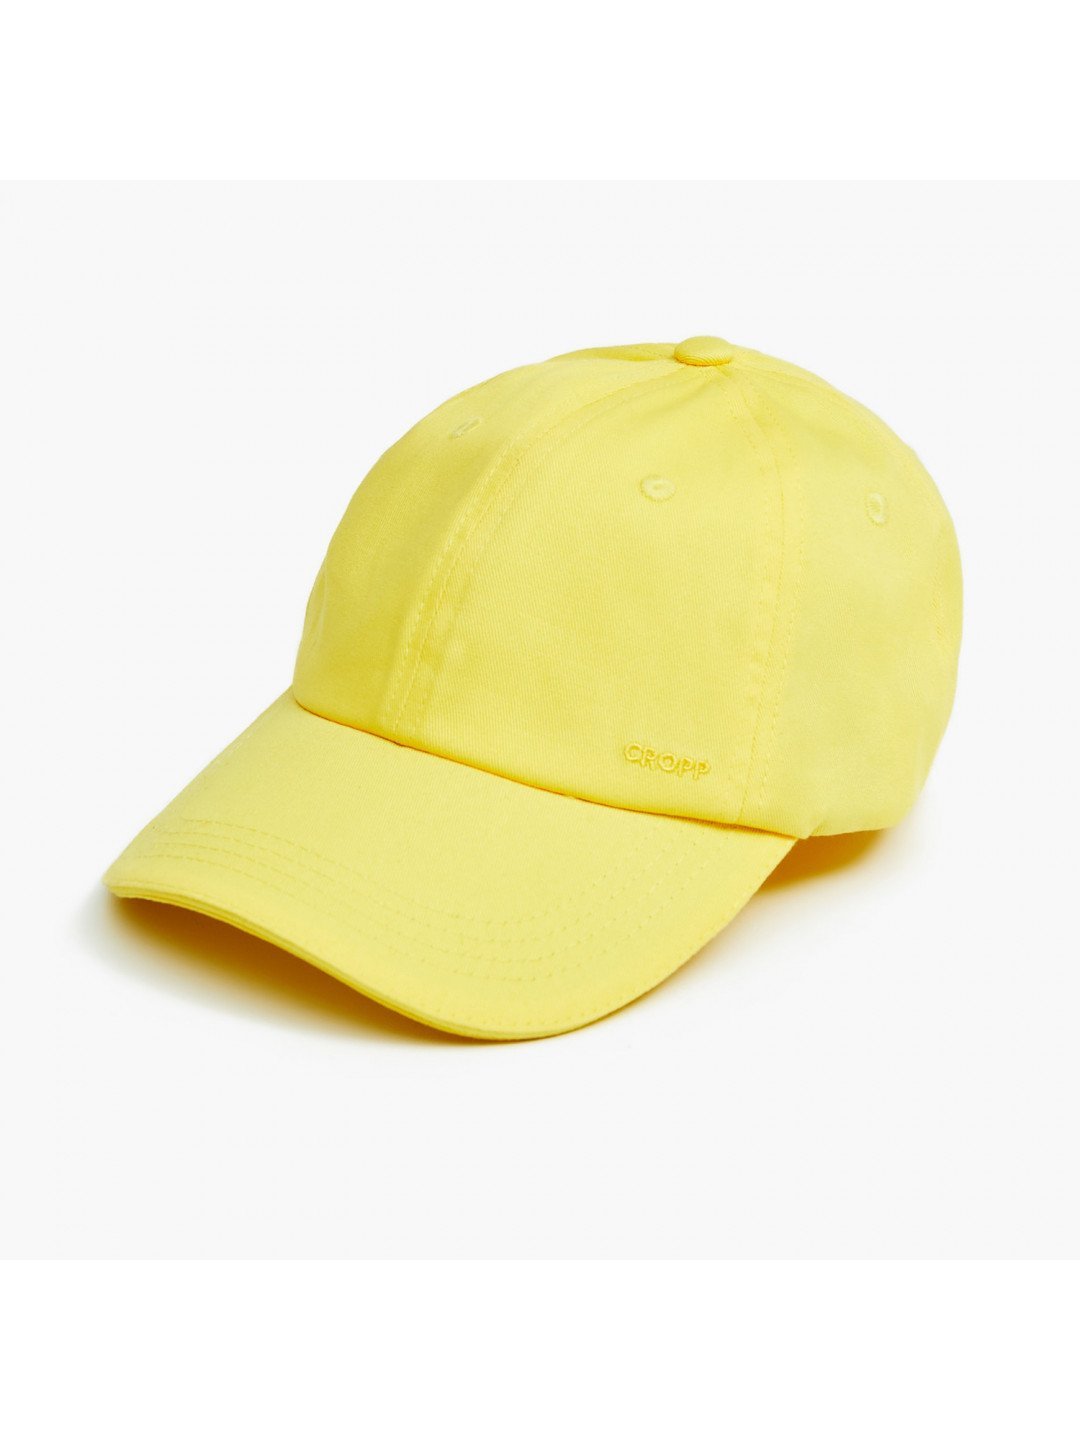 Cropp – Baseballová kšiltovka – Žlutá